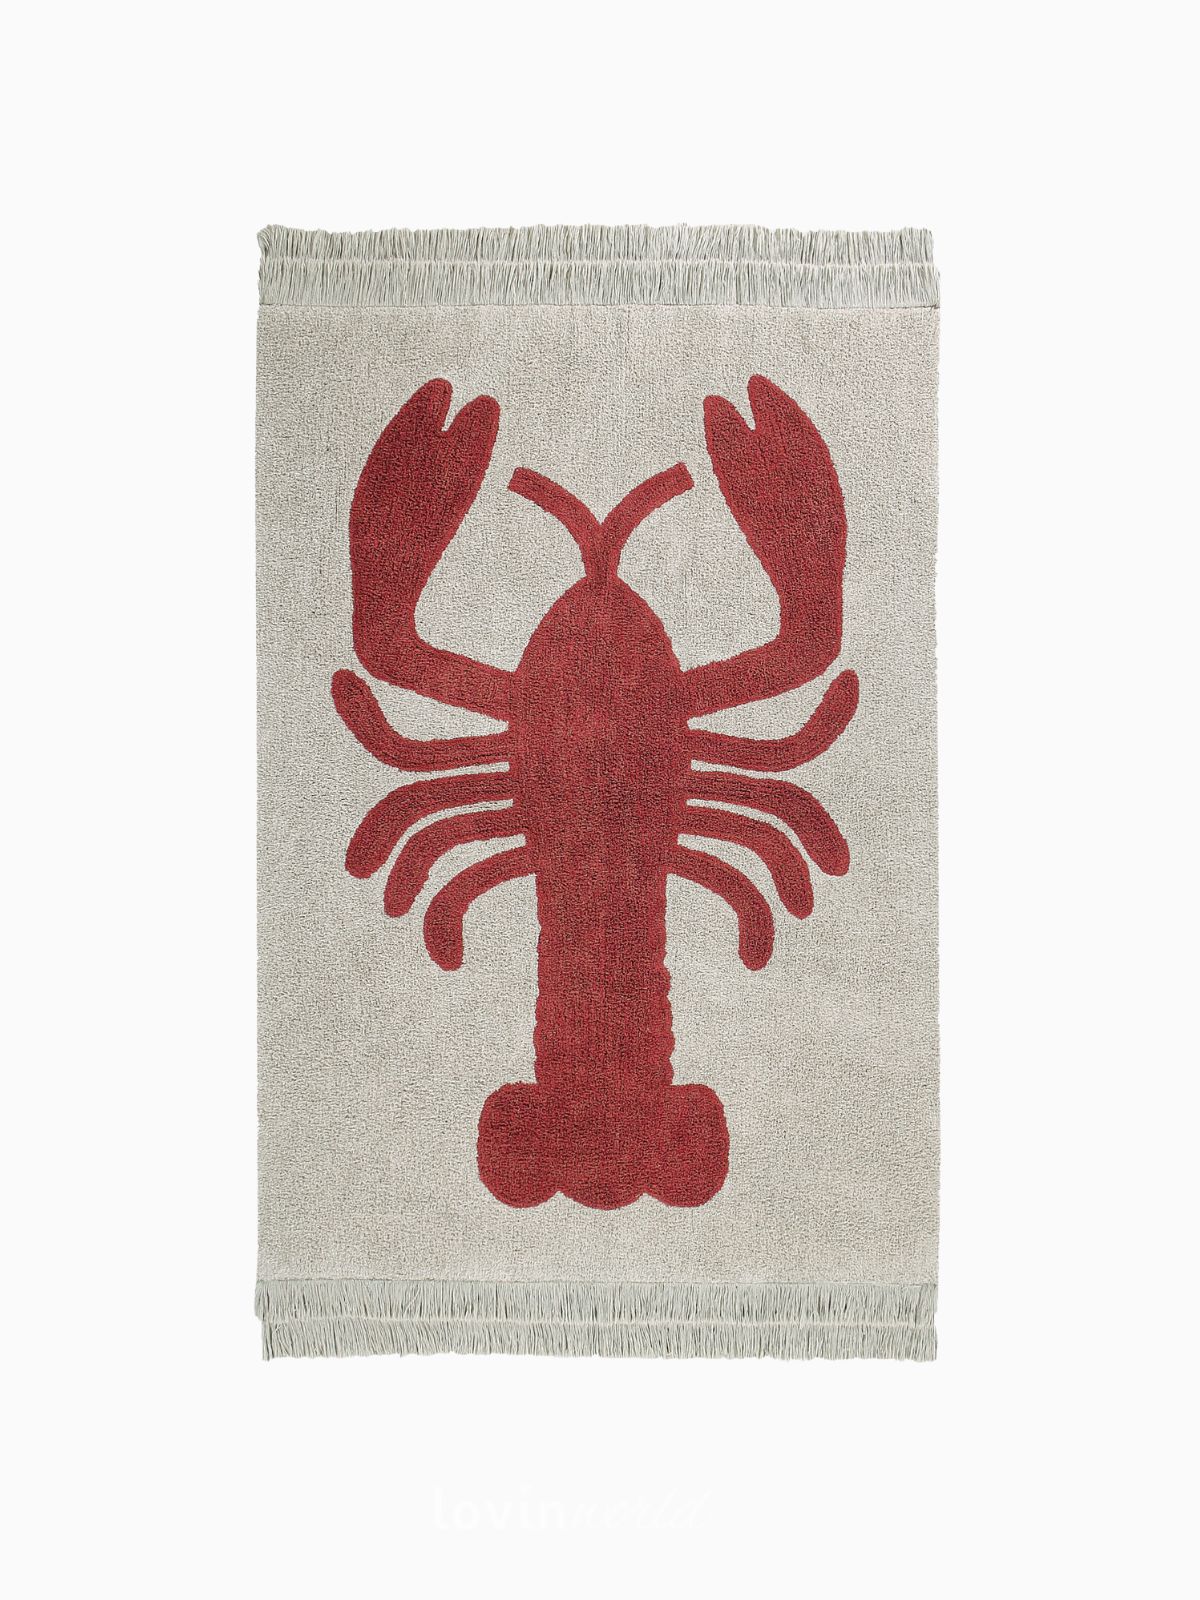 Tappeto in cotone lavabile Lobster M, 140x200 cm.-1